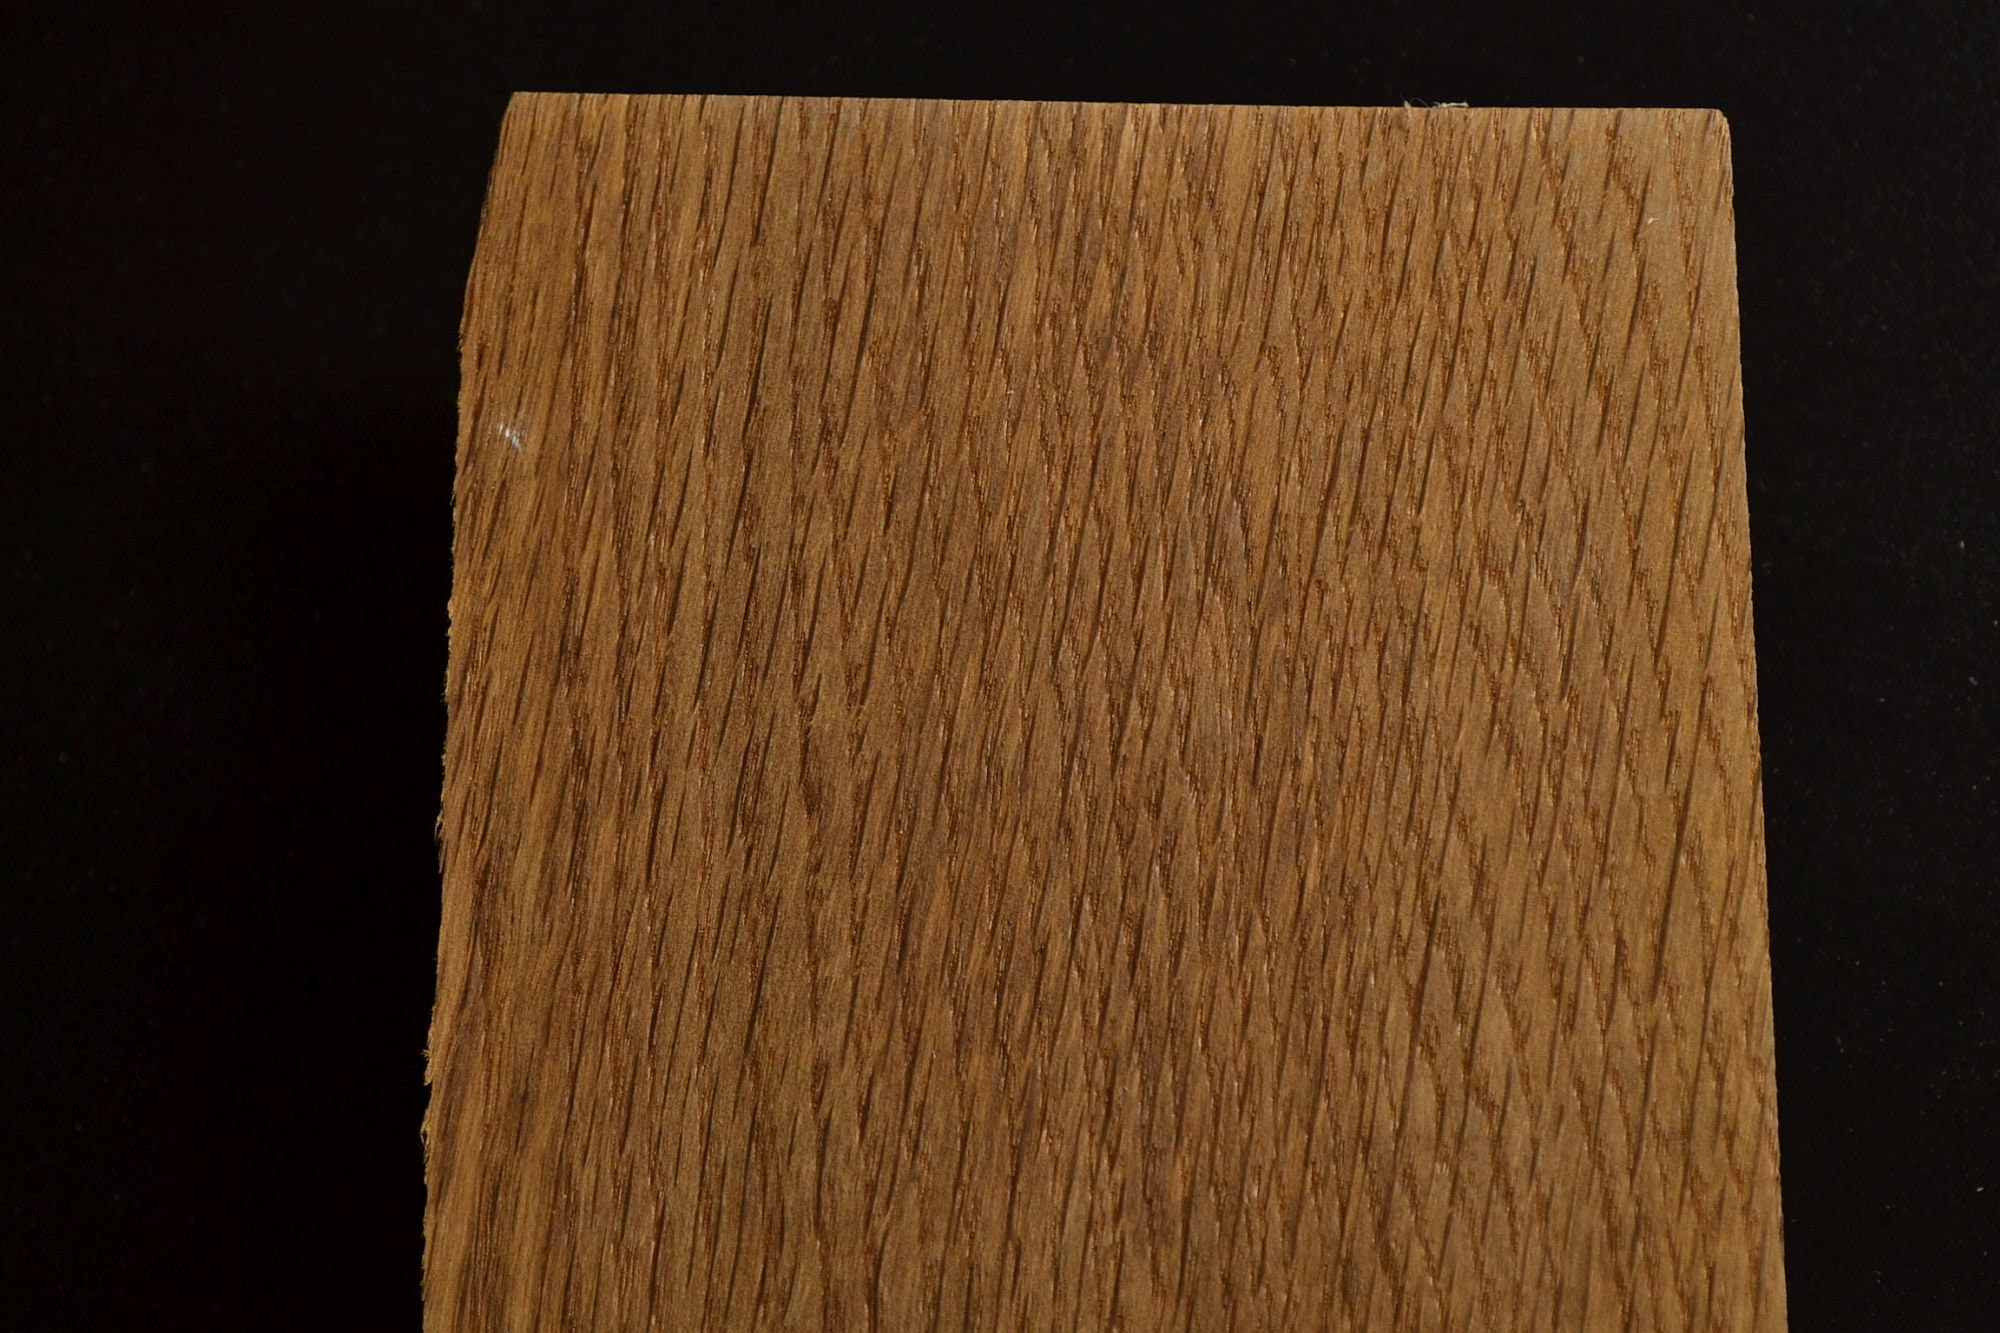 English Brown Oak Raw Wood Veneer Sheets  4 x 31 inches                  6772-32 